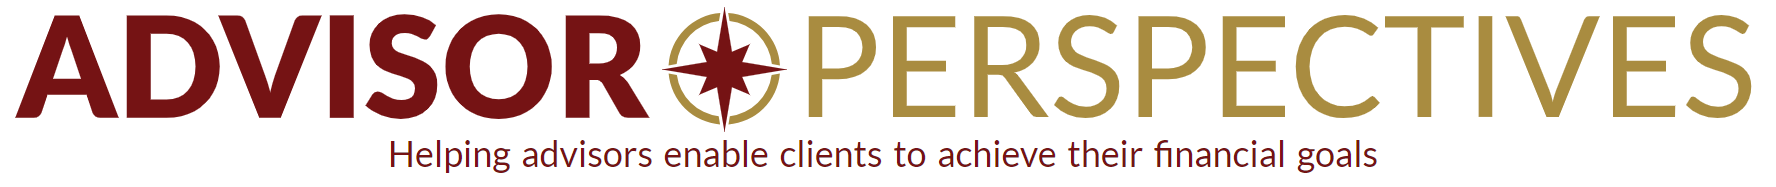 advisor perspectives logo